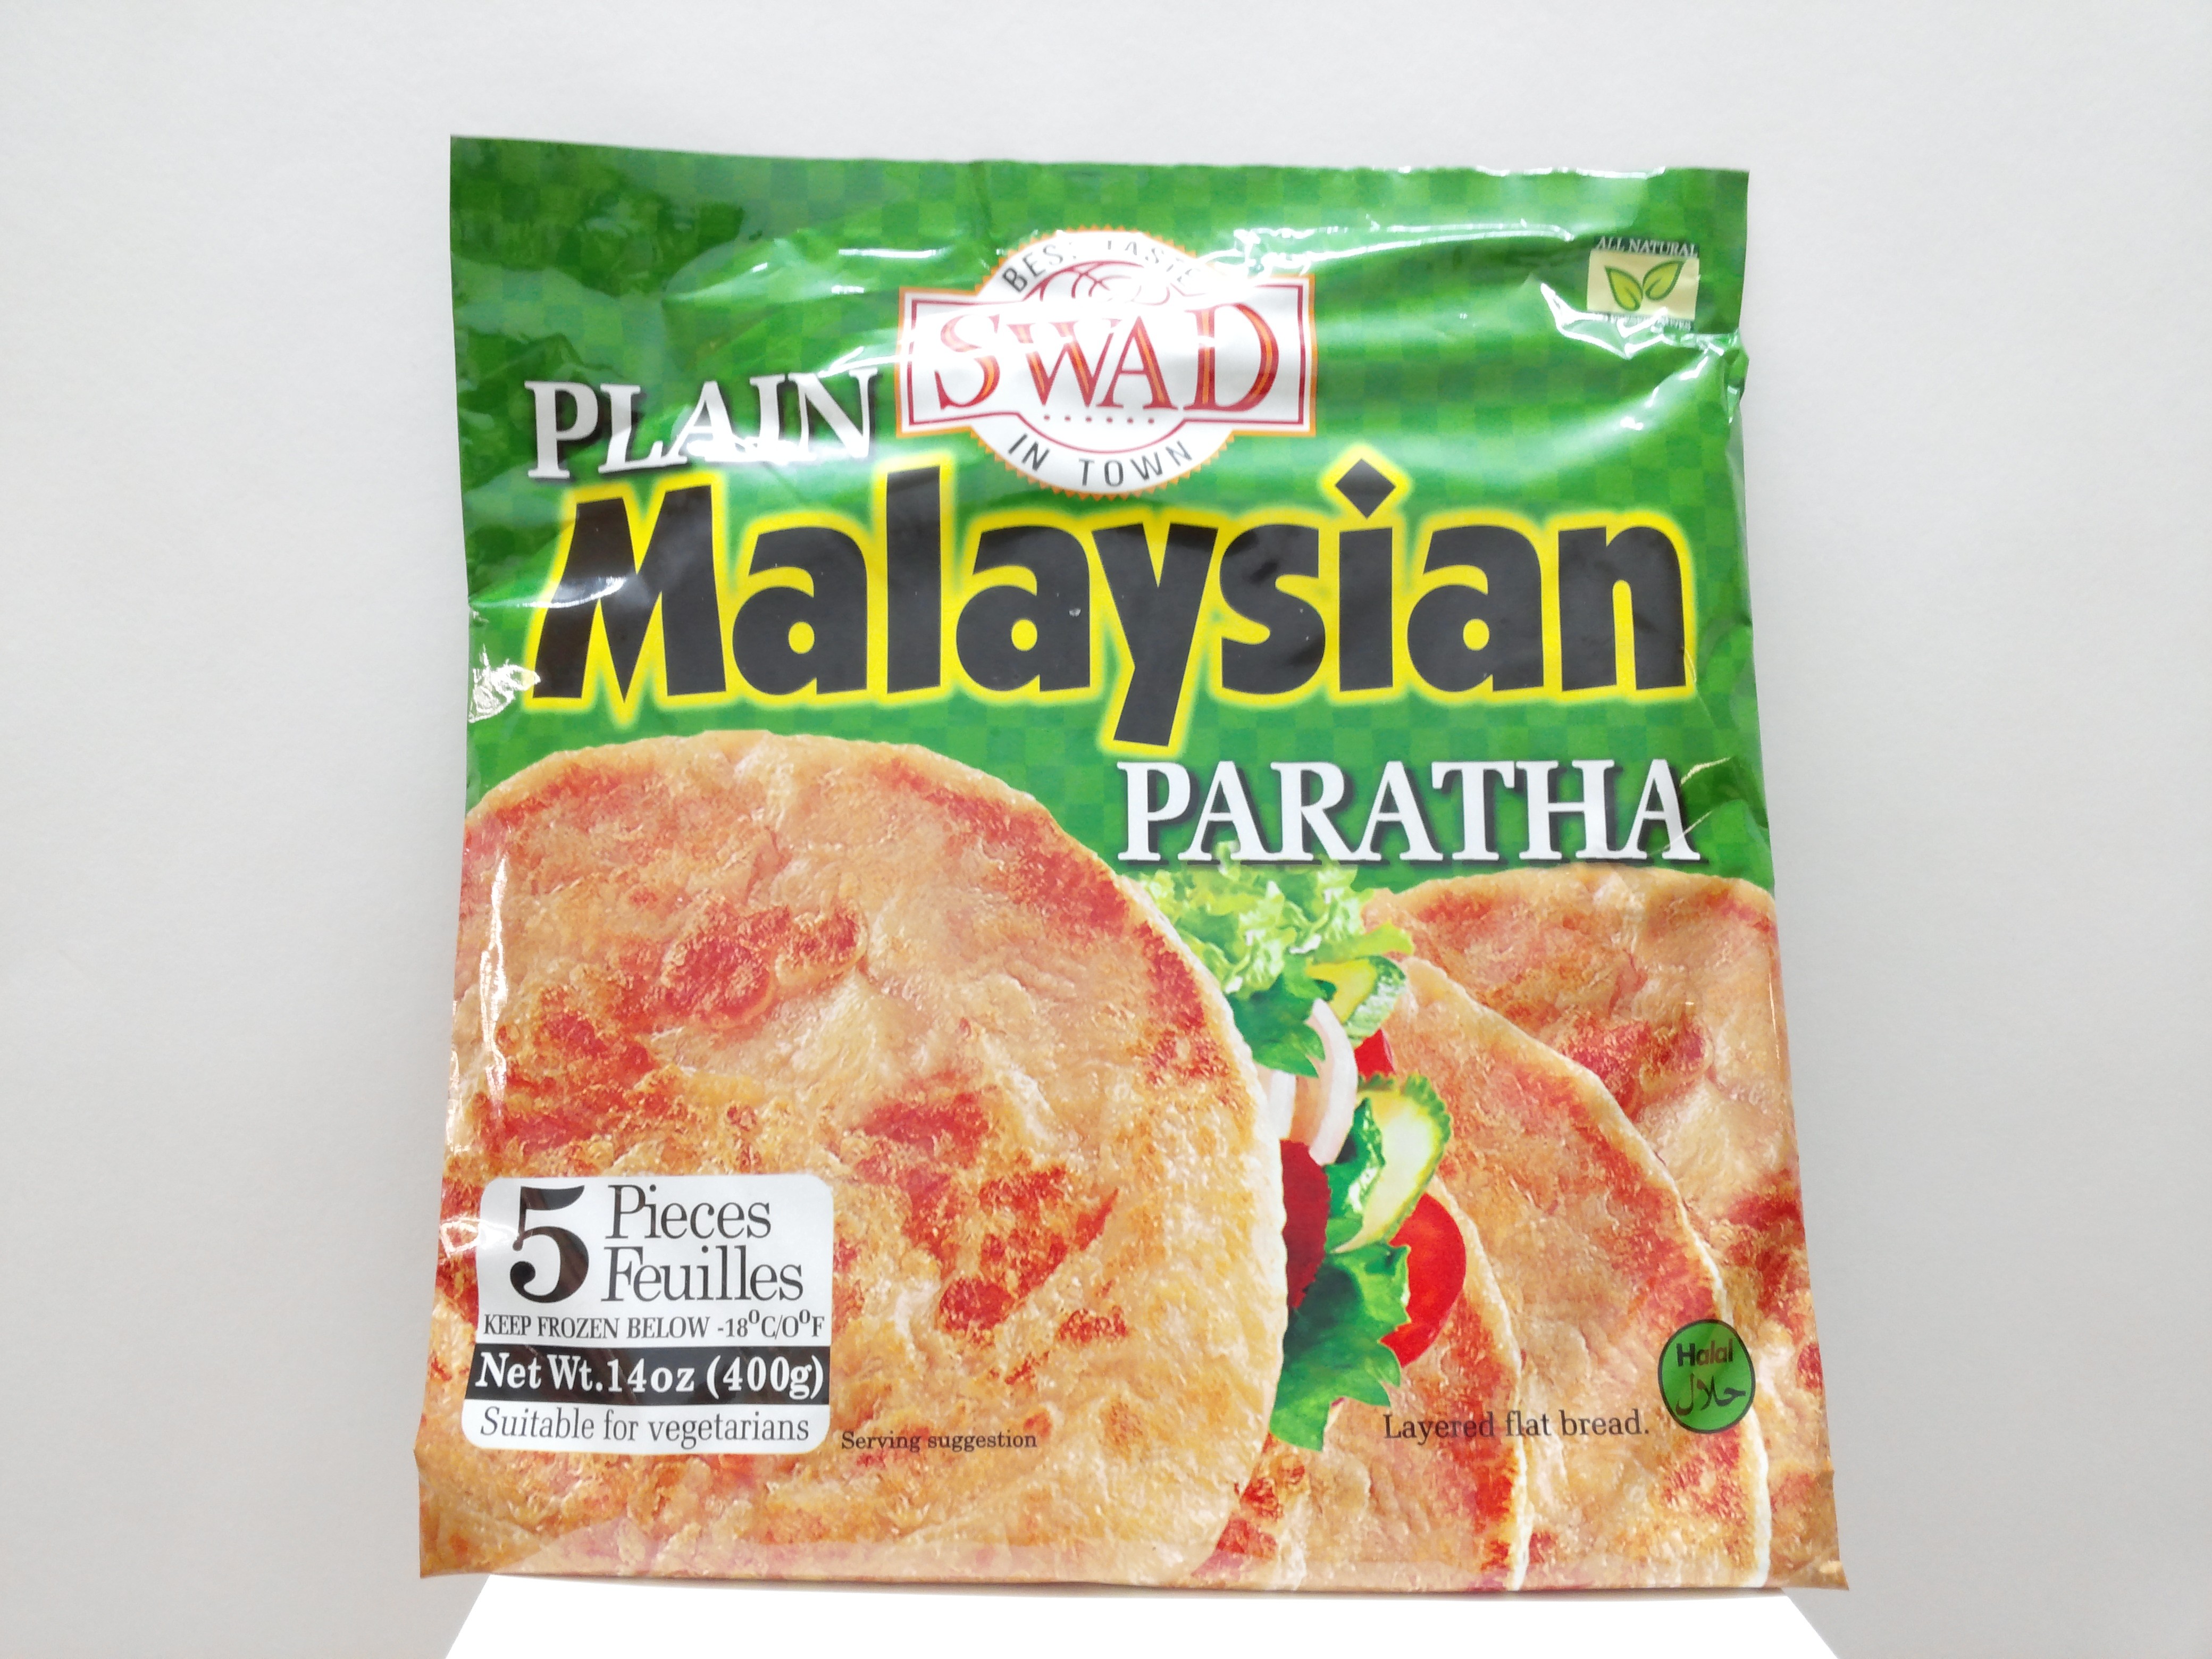 Swad Plain Malaysian Paratha 5 pcs 14 oz